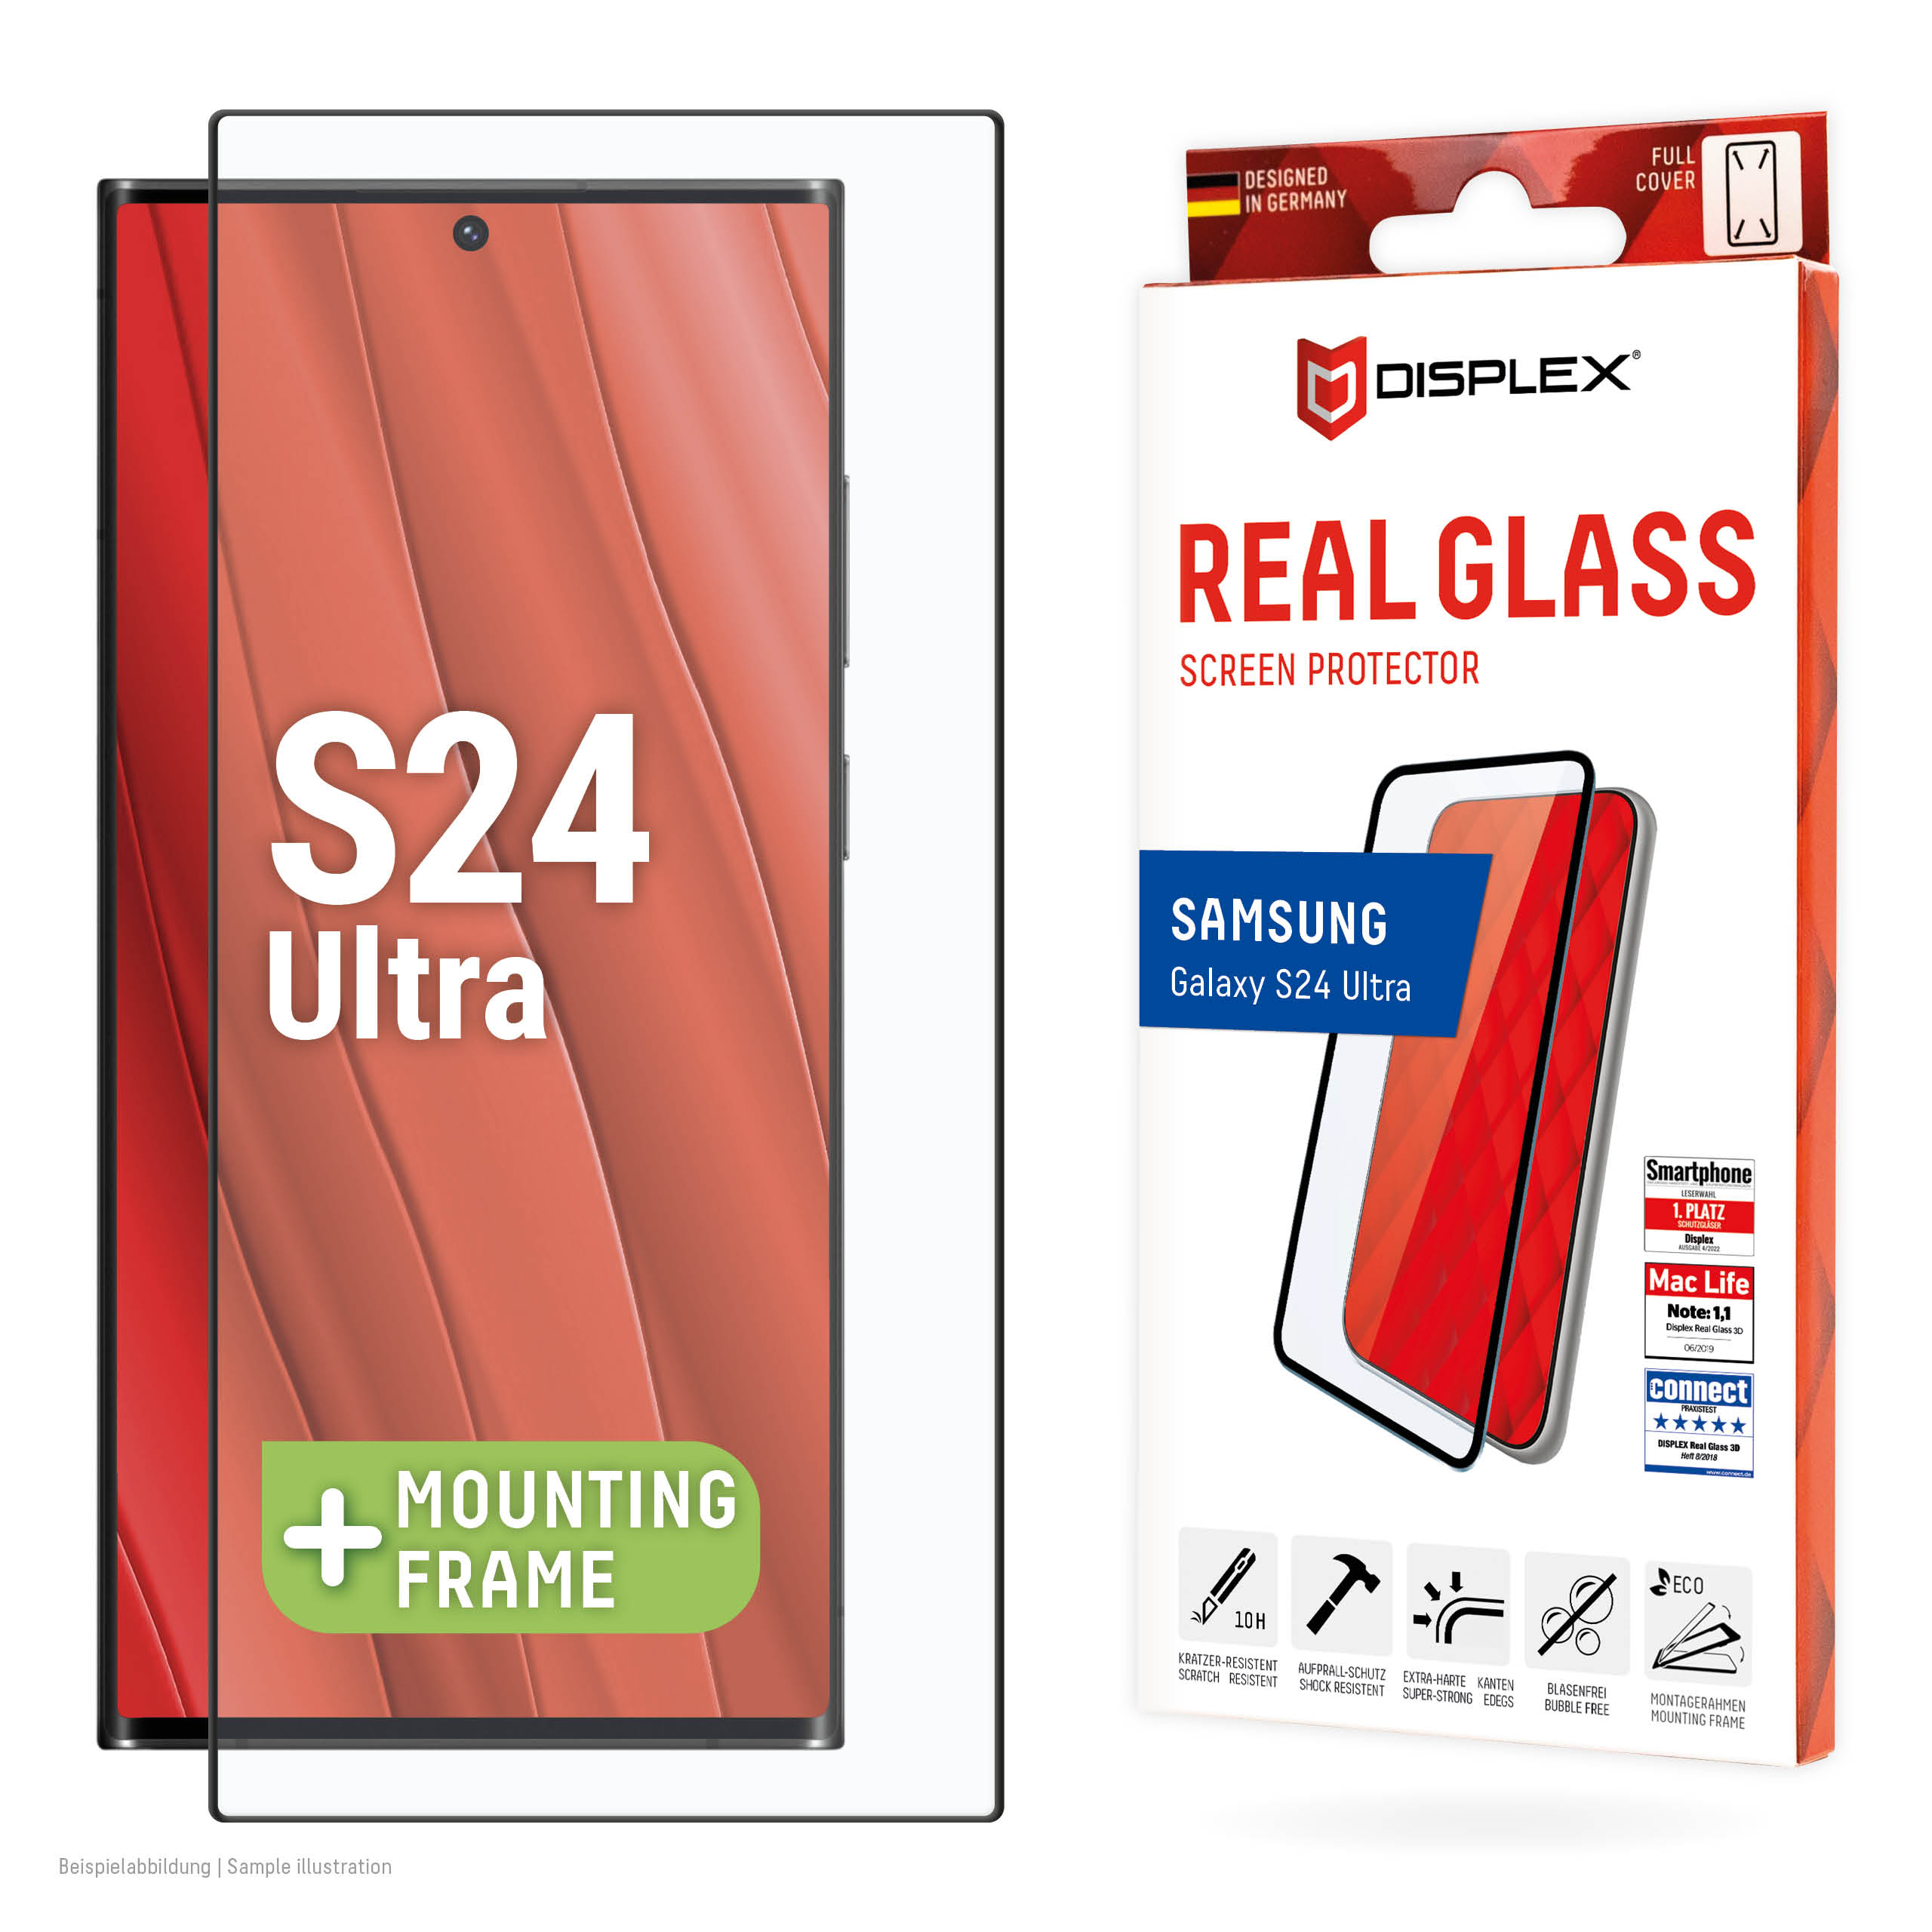 01899-Samsung-Galaxy-S24-Ultra-Real-Glass-FC_EN